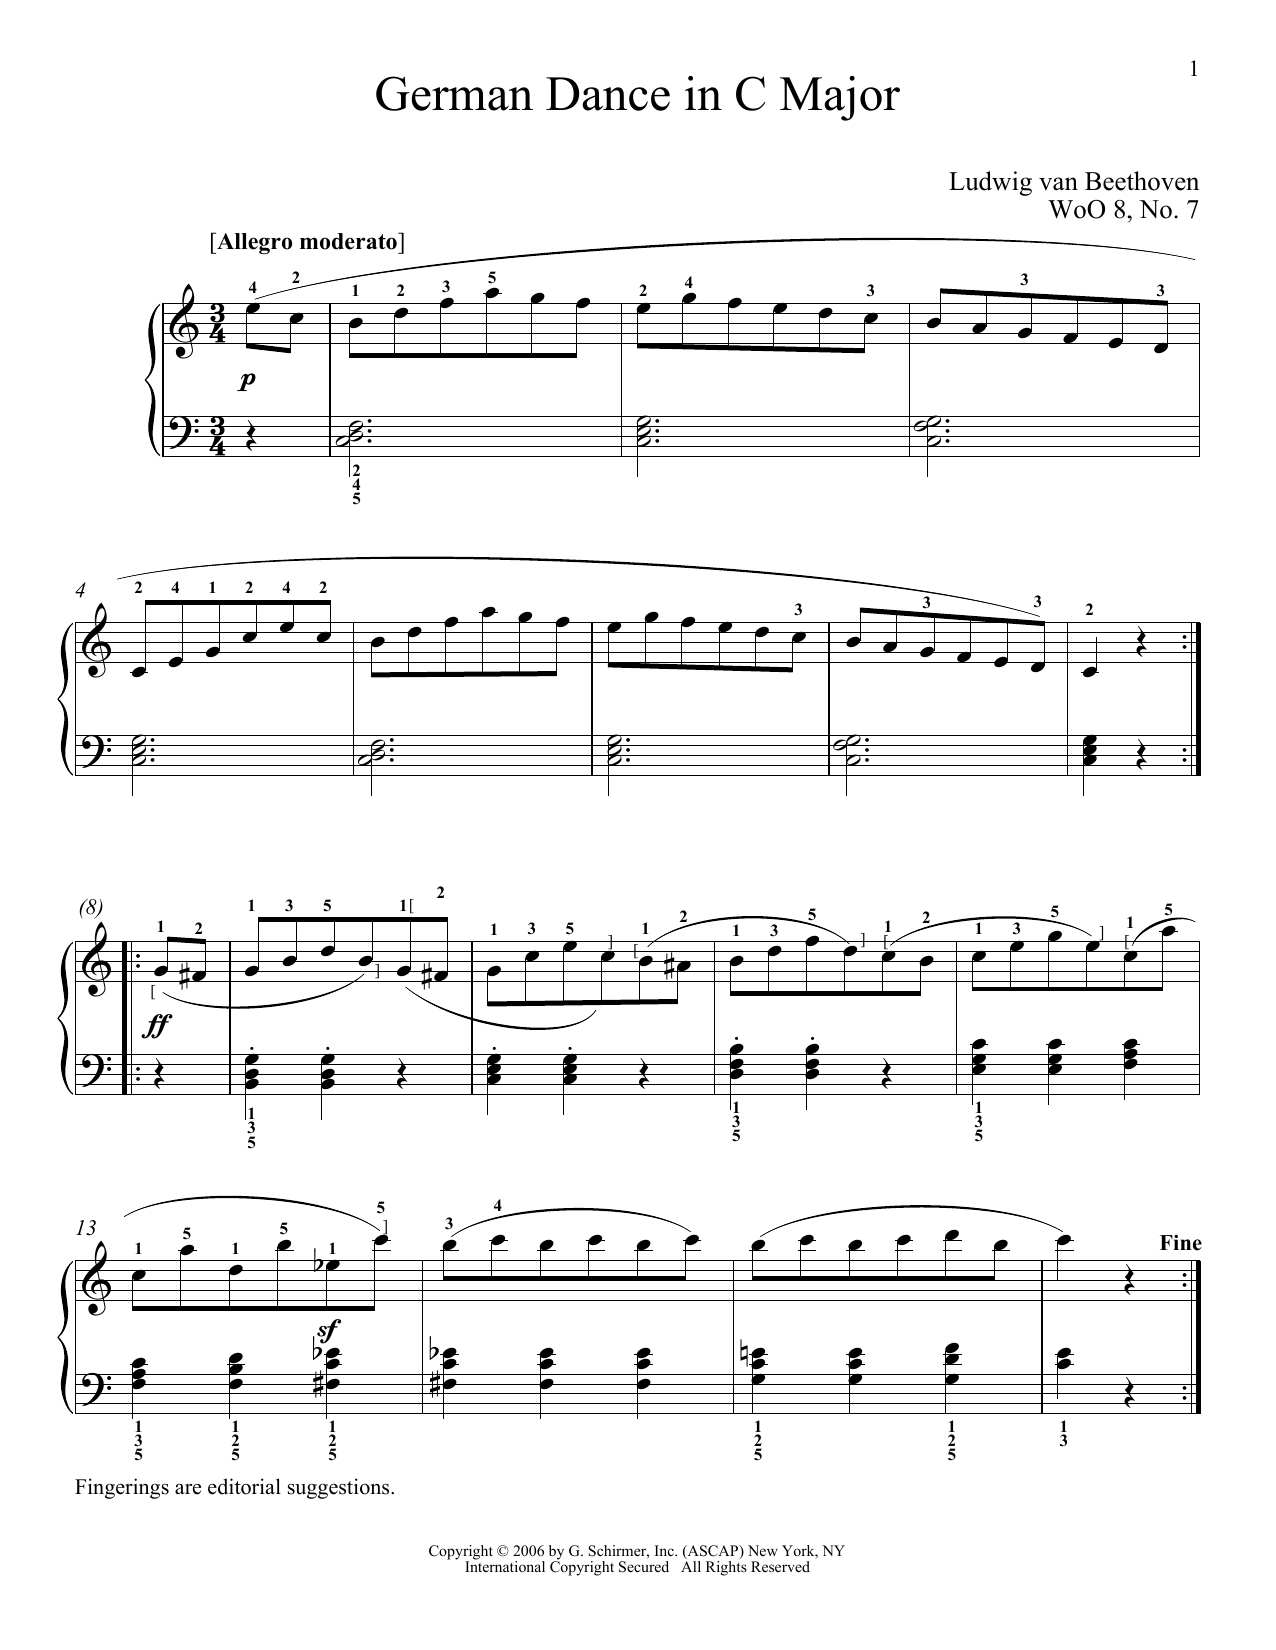 Ludwig van Beethoven German Dance In C Major, WoO 8, No. 7 Sheet Music Notes & Chords for Piano - Download or Print PDF